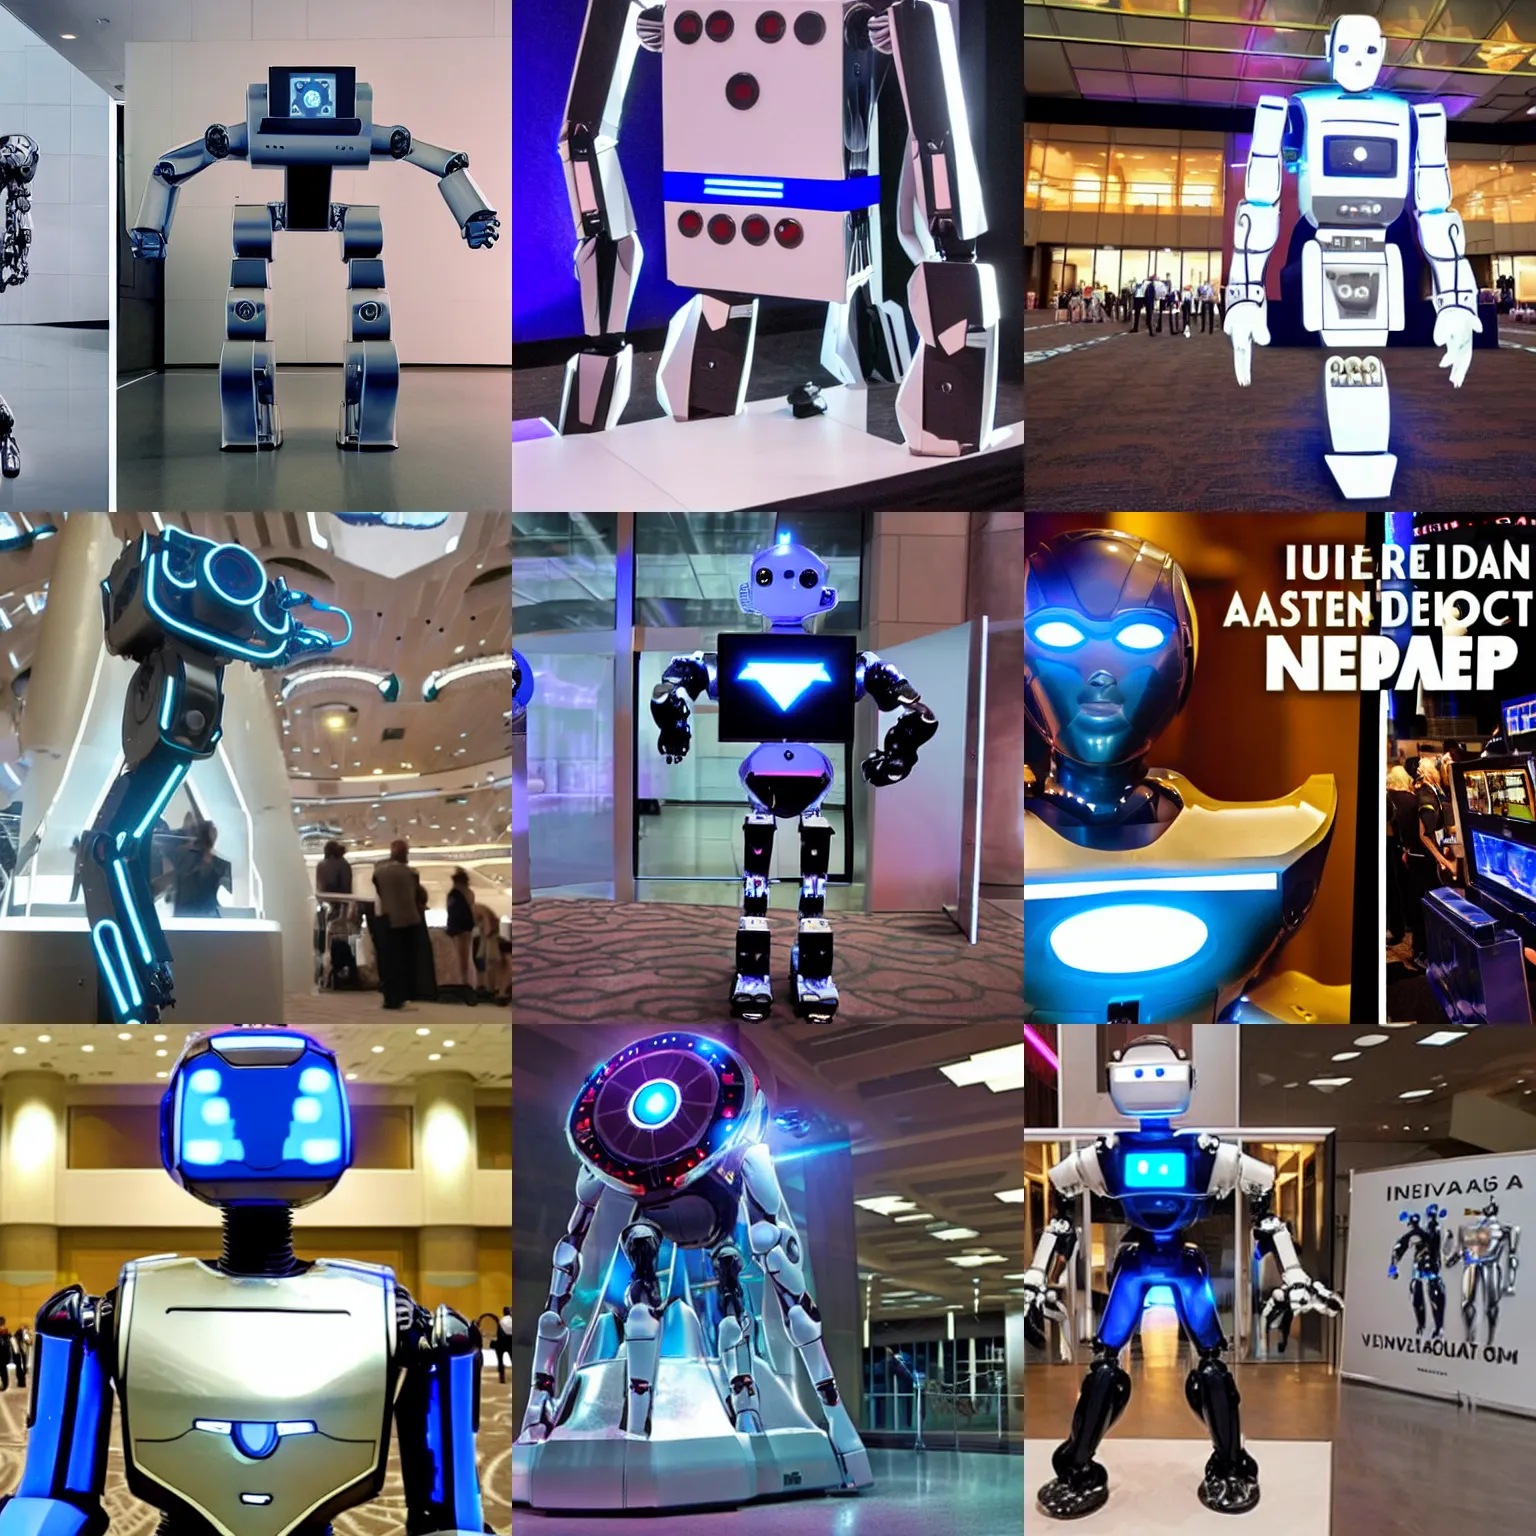 Prompt: <robot attention-grabbing surprising type='futuristic' location='las vegas convention center'>superhero robot reveals ability</robot>